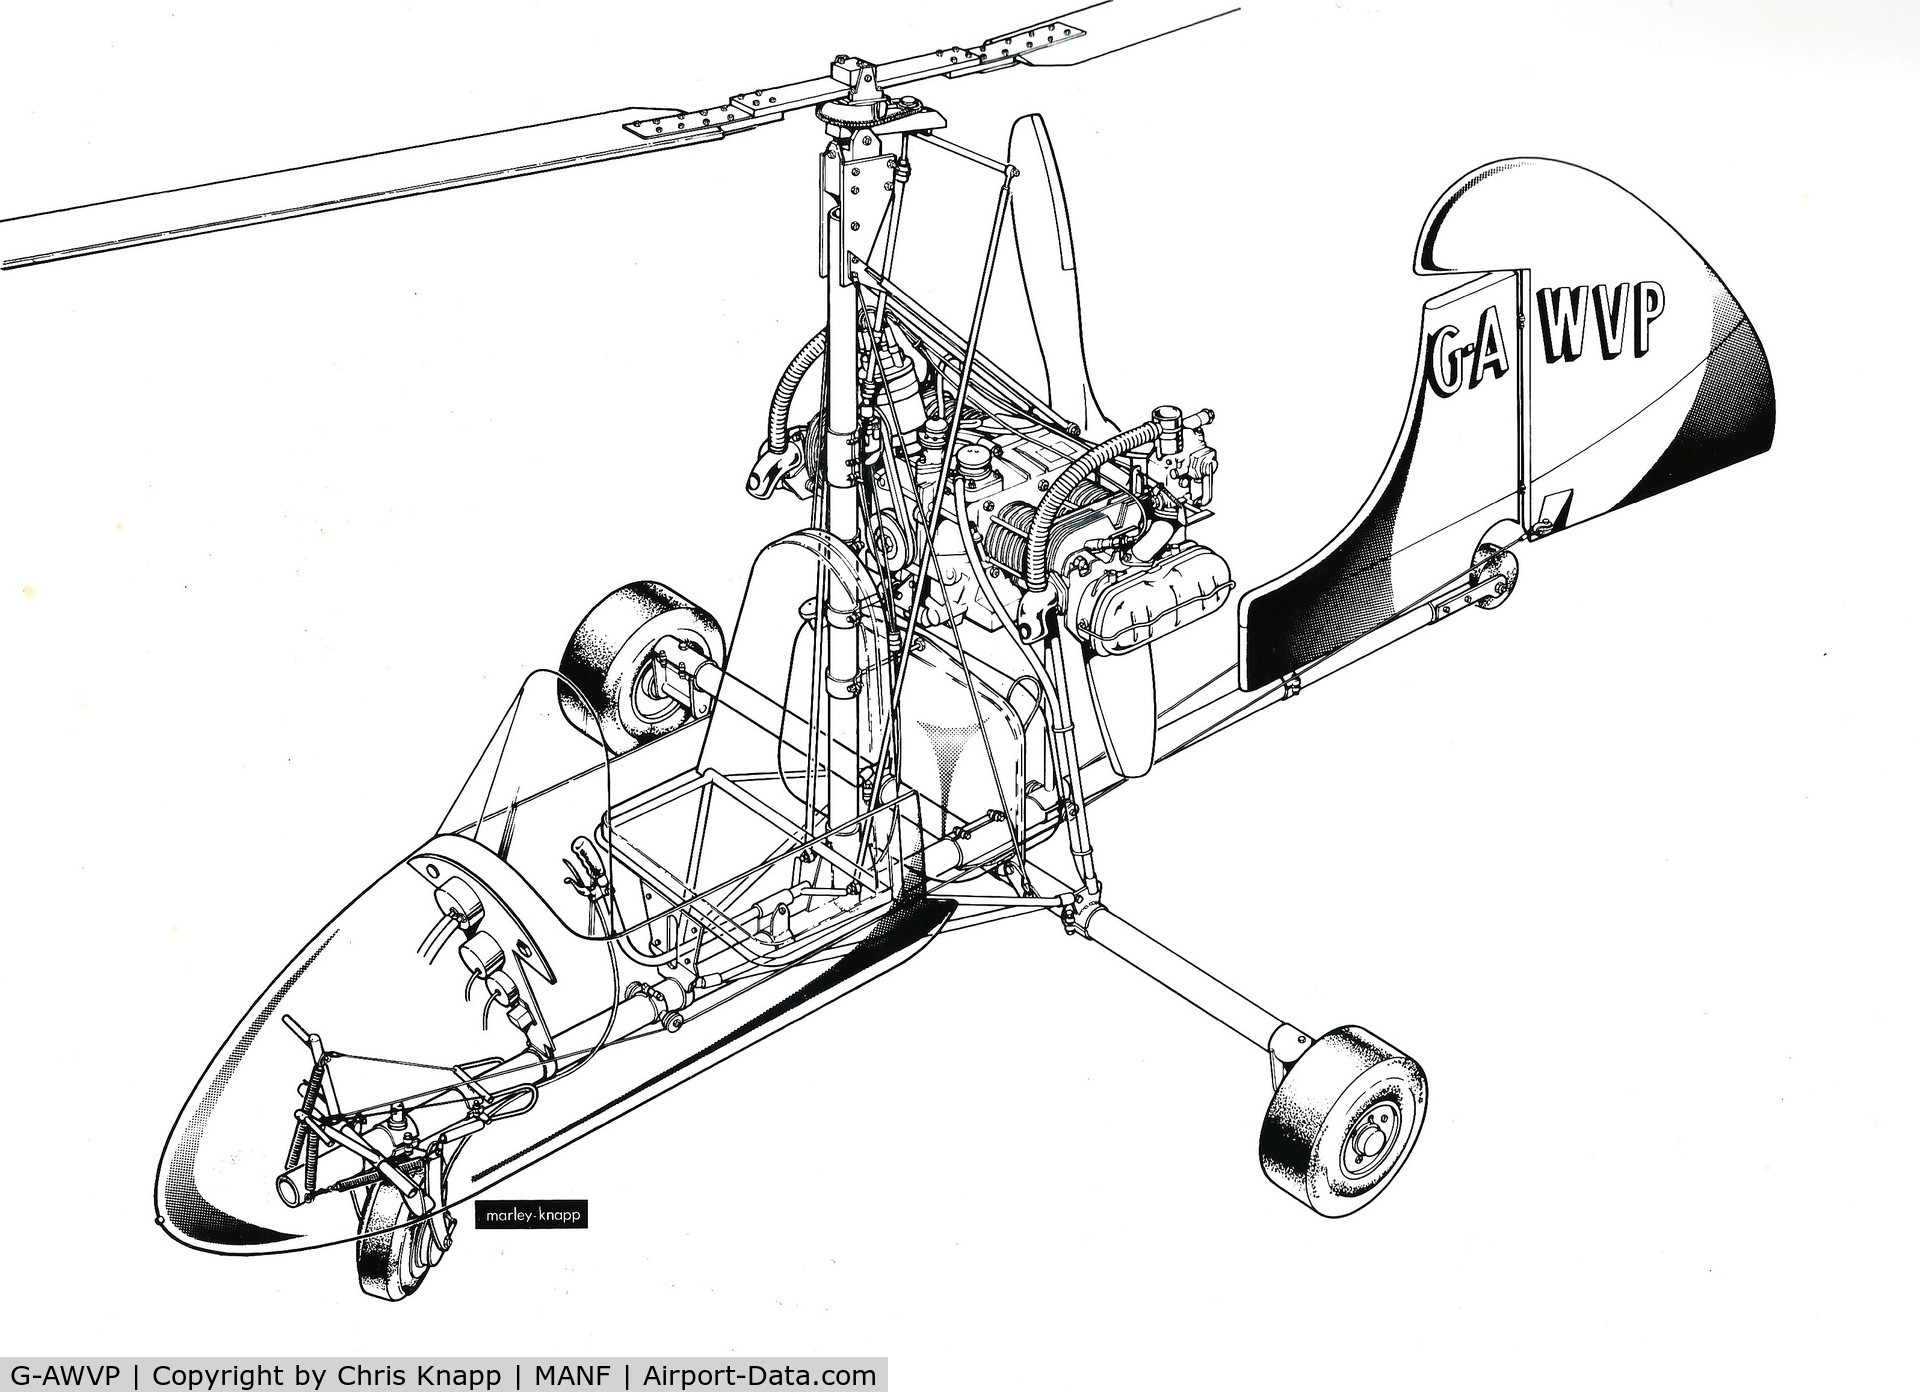 G-AWVP, Gyroflight BROOKLAND HORNET C/N 9, 3D illustration.